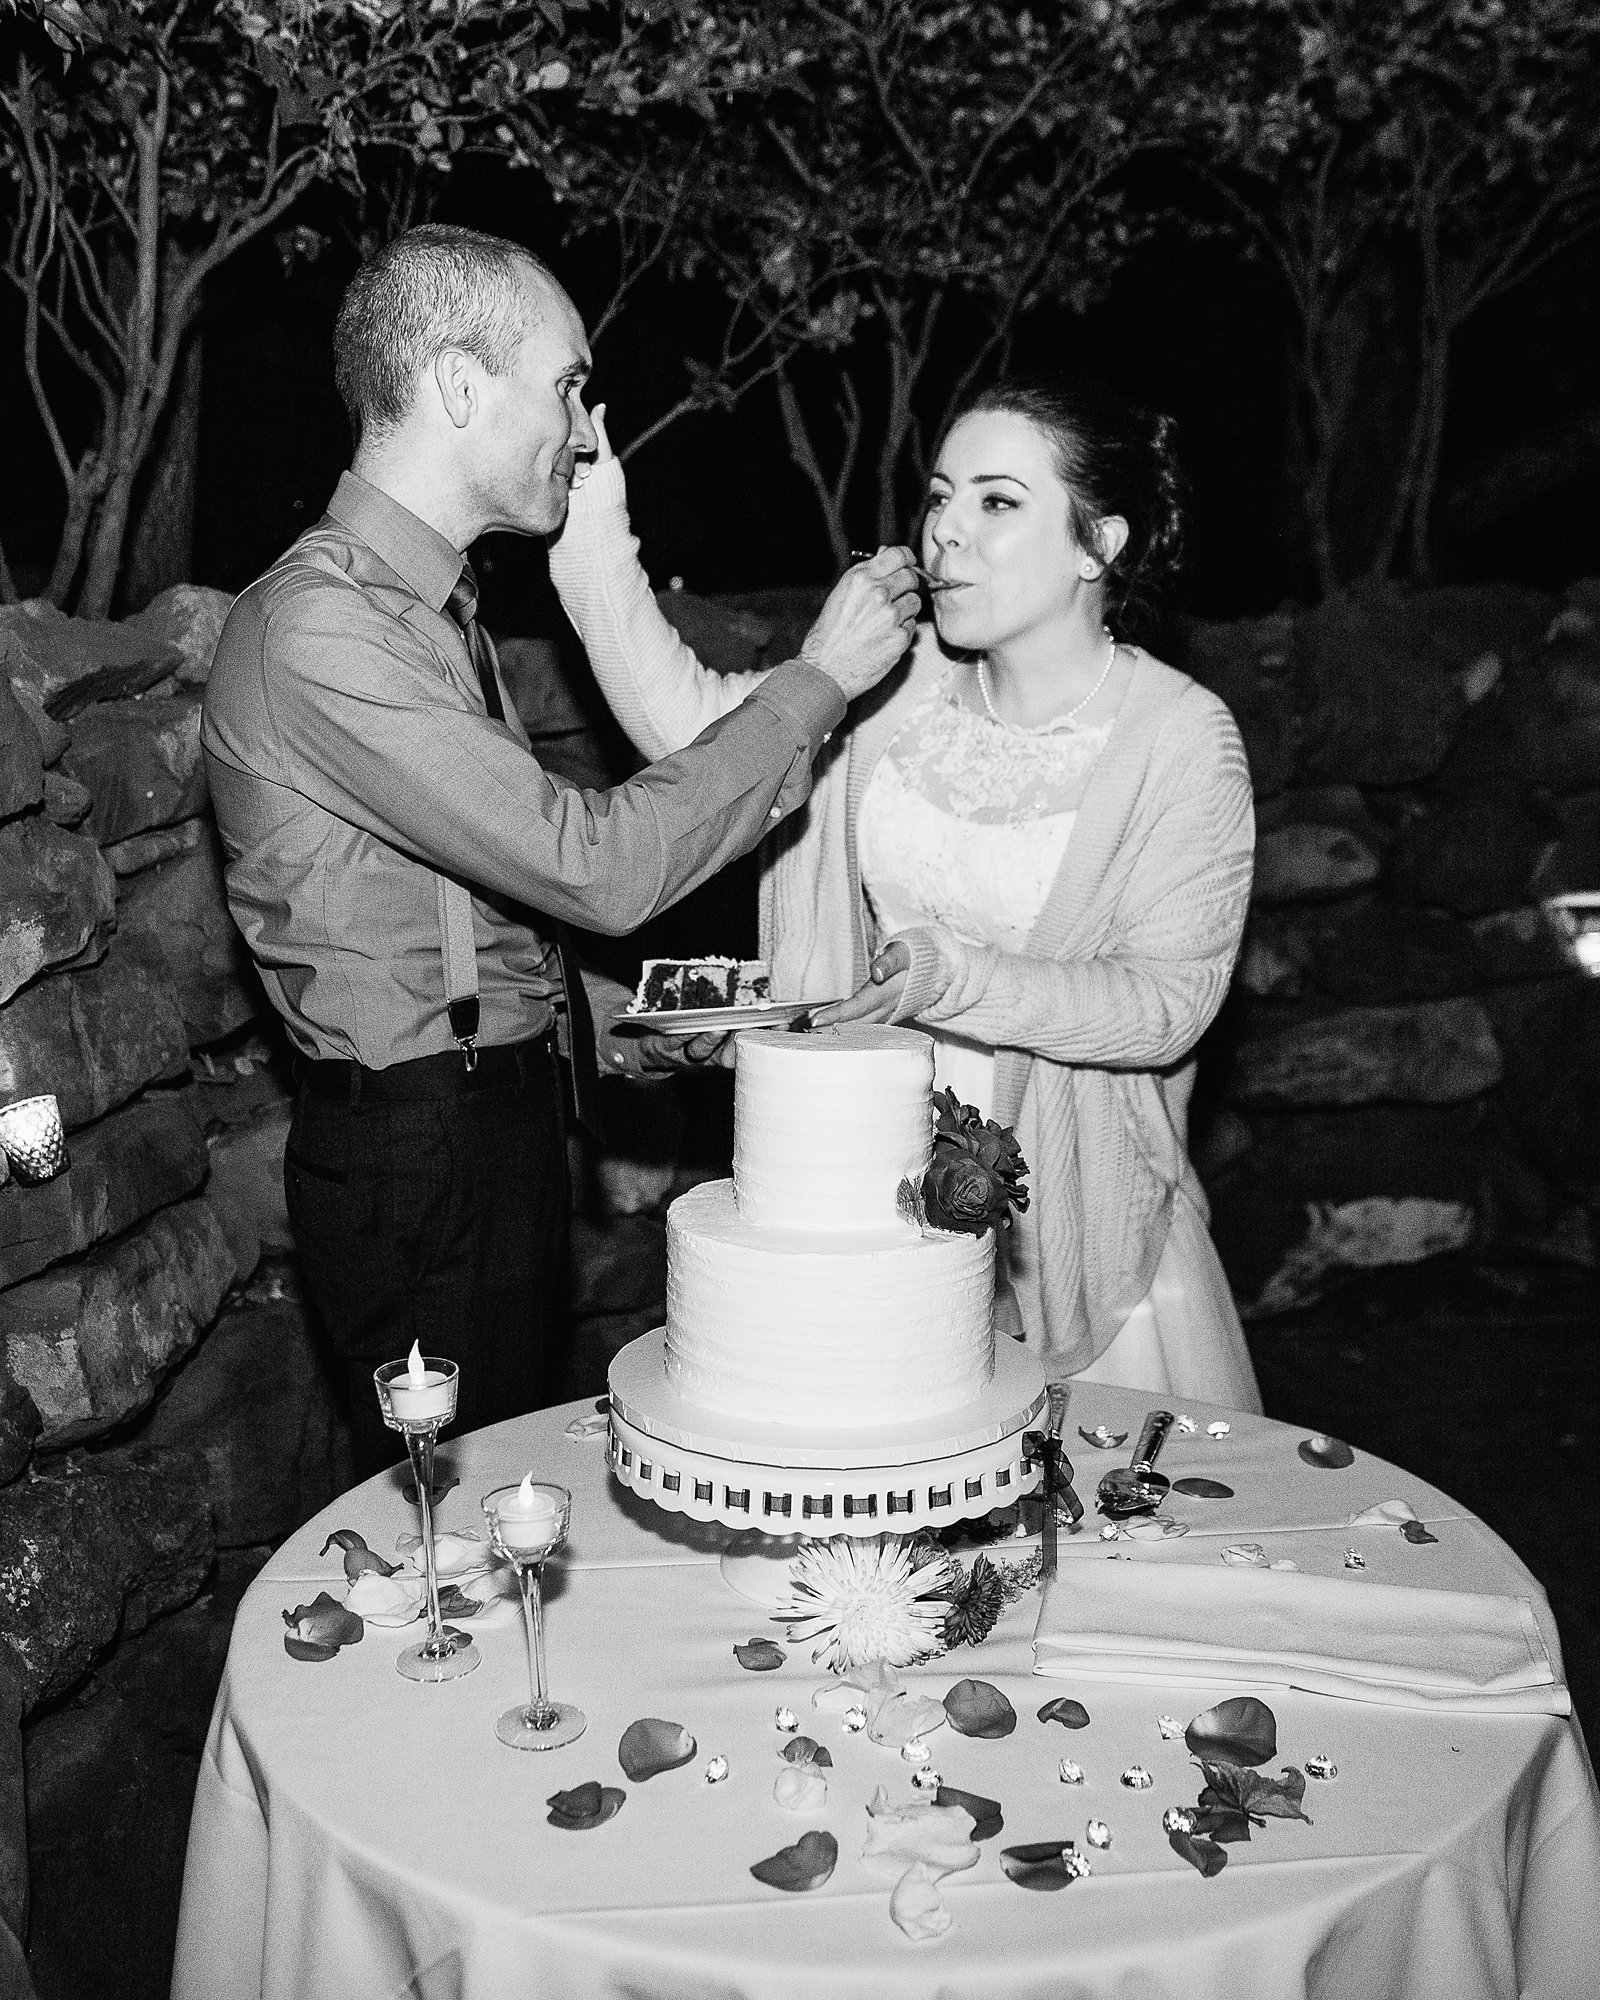 Bride and groom cutting their wedding cake at their L'Auberge de Sedona wedding reception by Arizona wedding photographer PMA Photography.